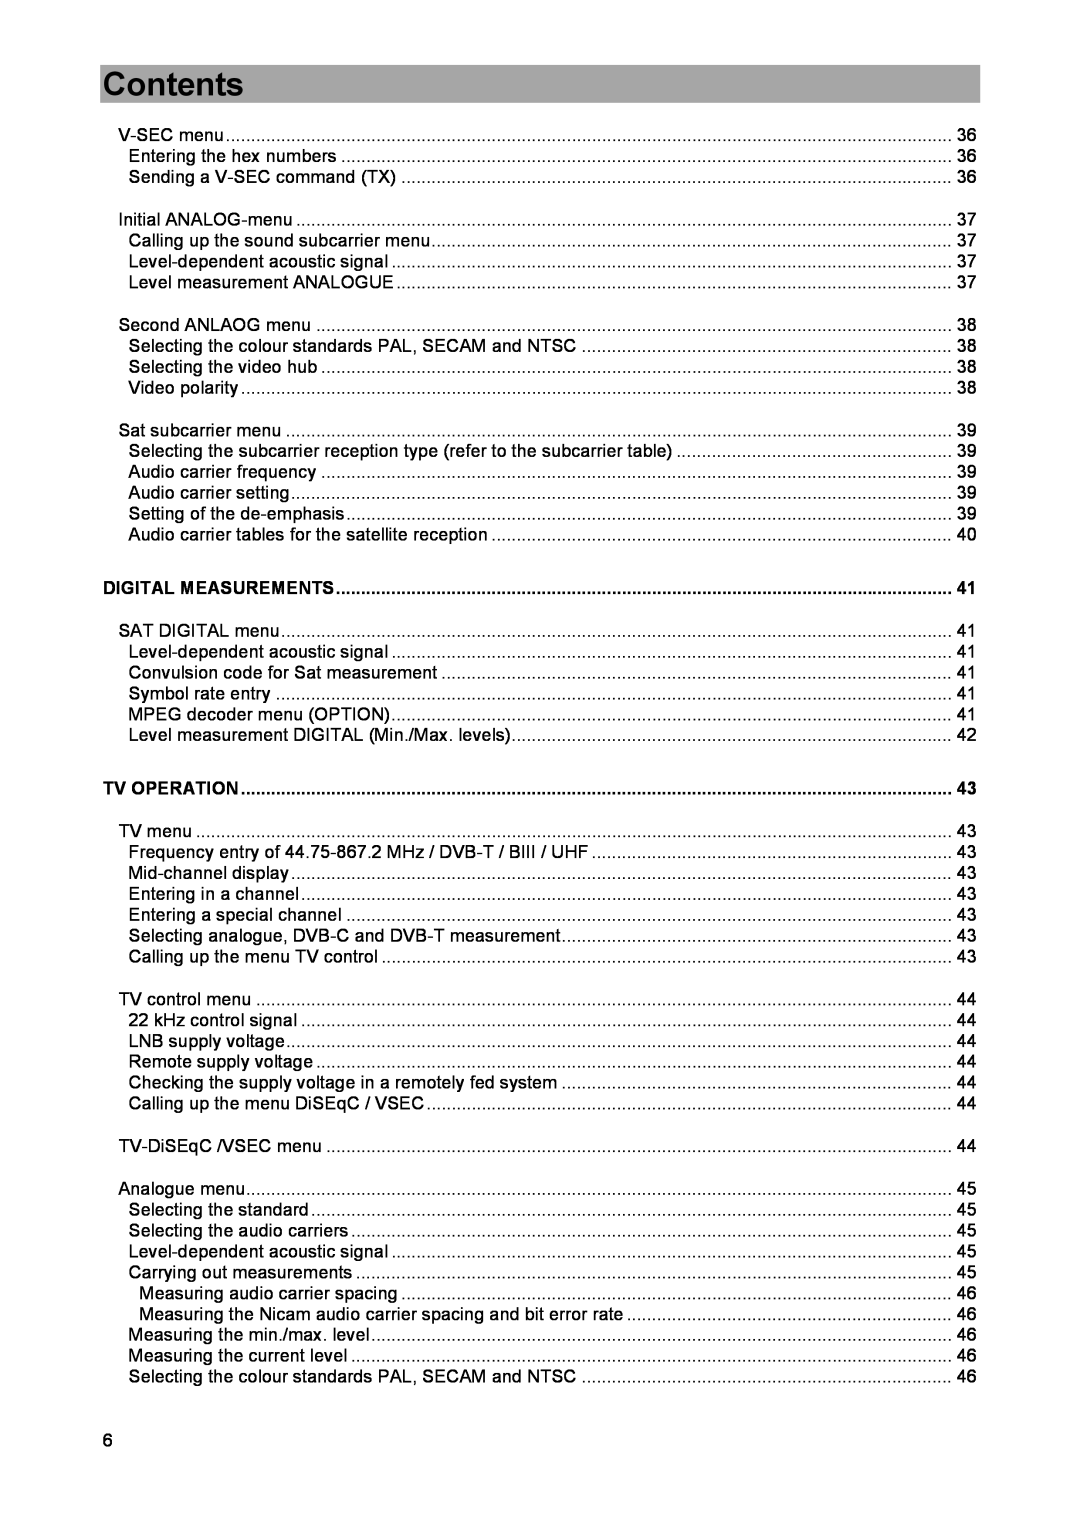 DreamGEAR MSK 33 manual Contents, Digital Measurements, Tv Operation 